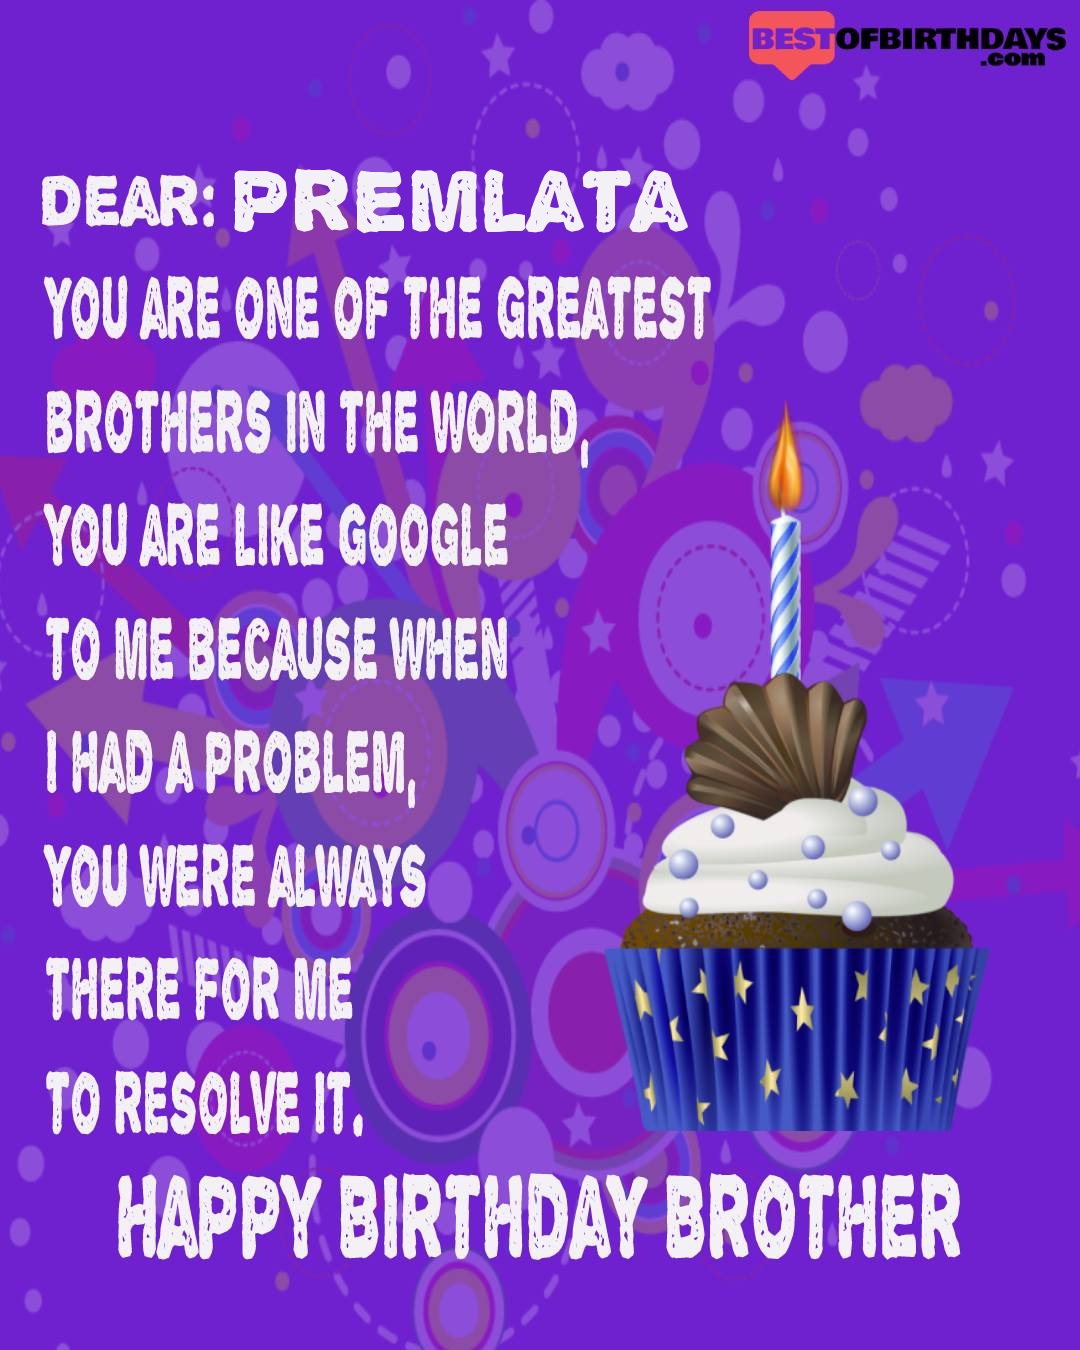 Happy birthday premlata bhai brother bro